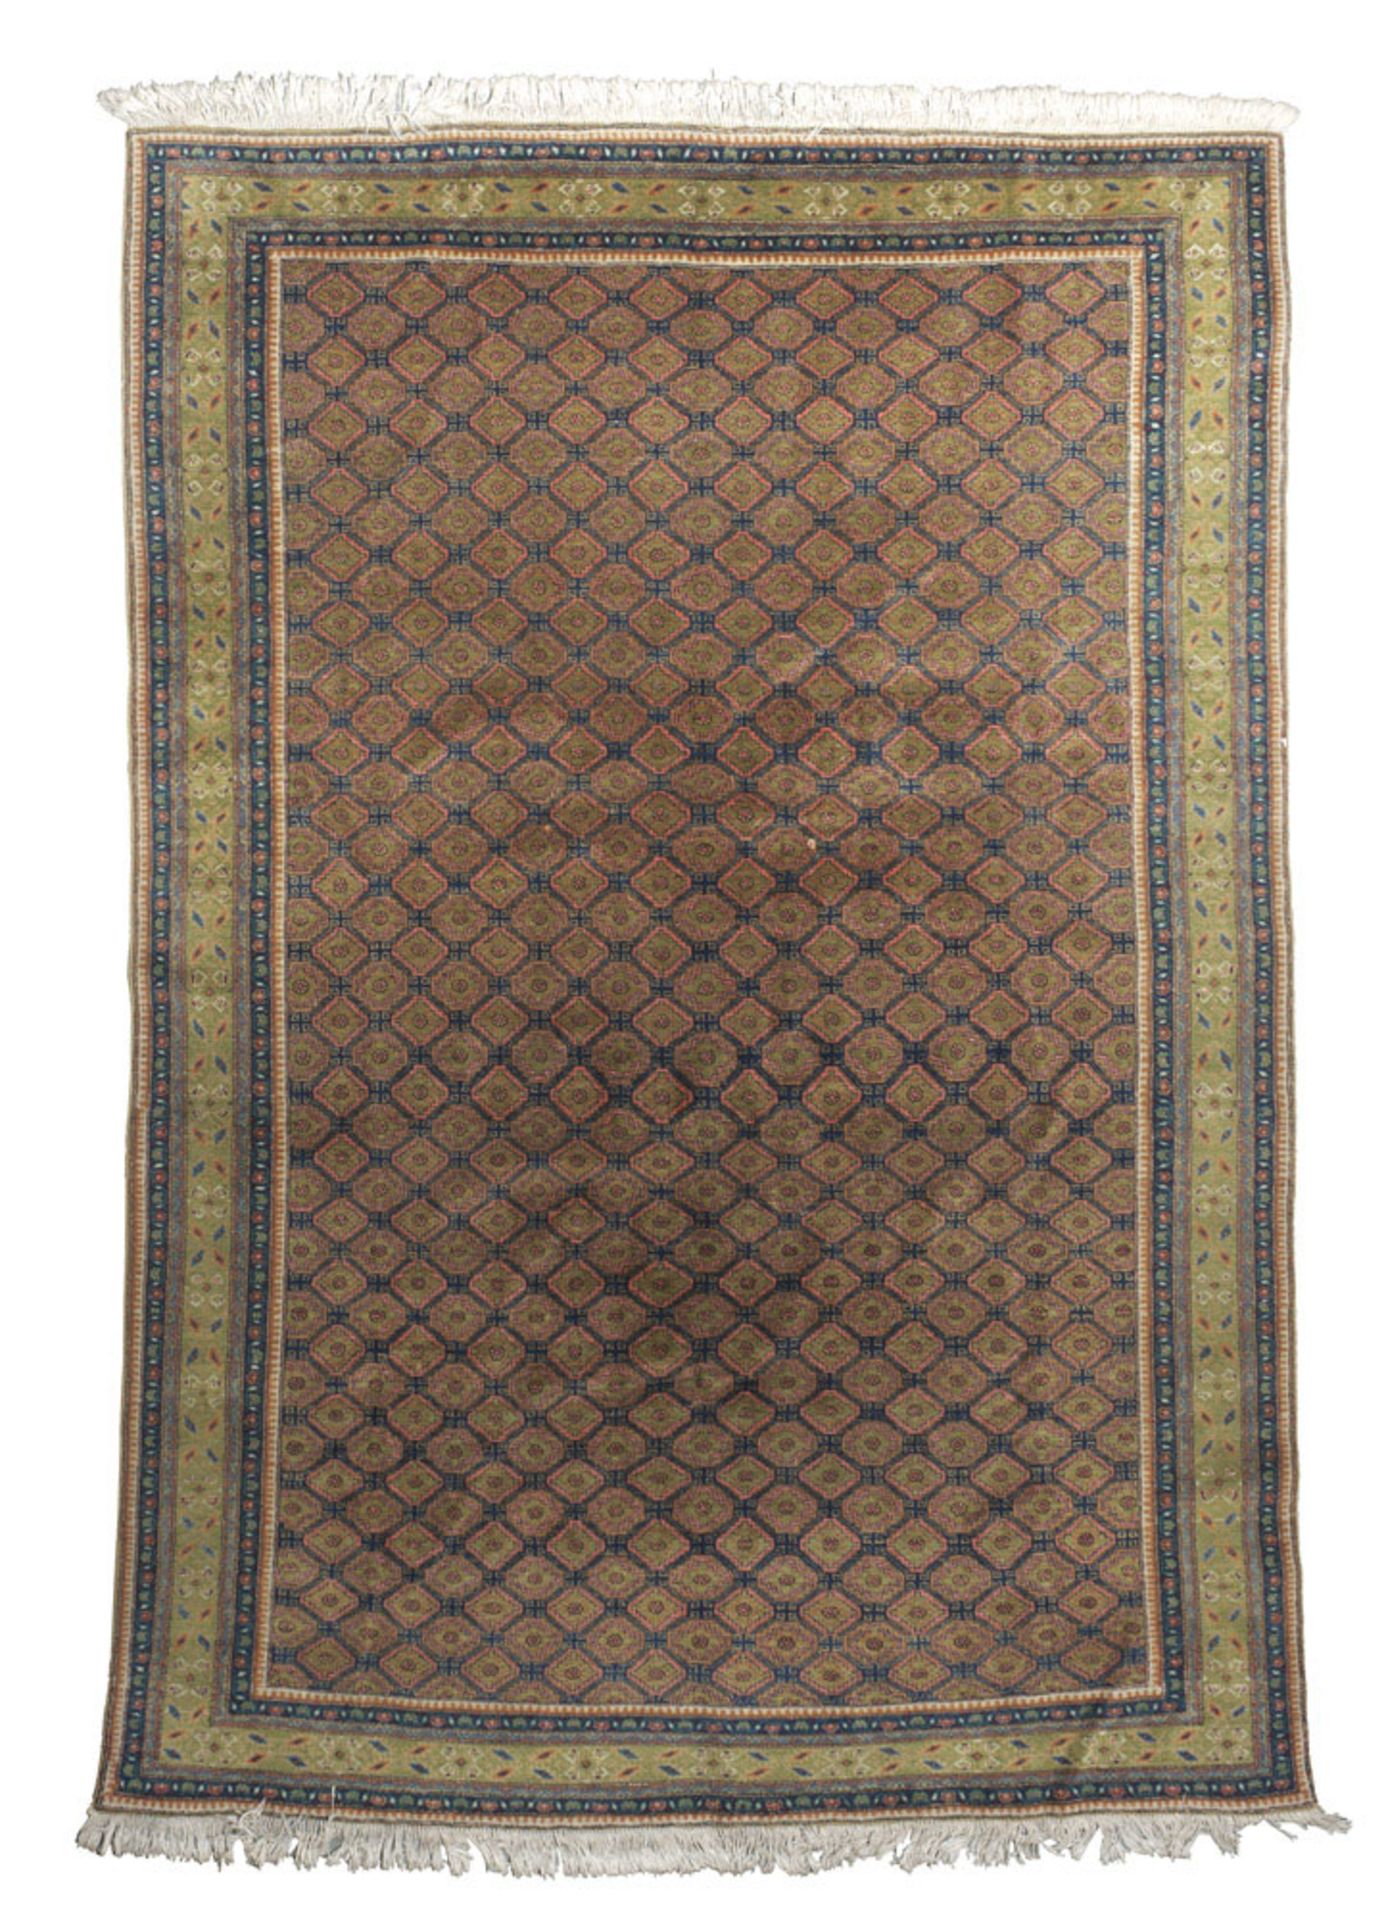 Persian rug Mir, mid 20th century. Measures cm. 280 x 190. TAPPETO PERSIANO MIR, METÁ XX SECOLO